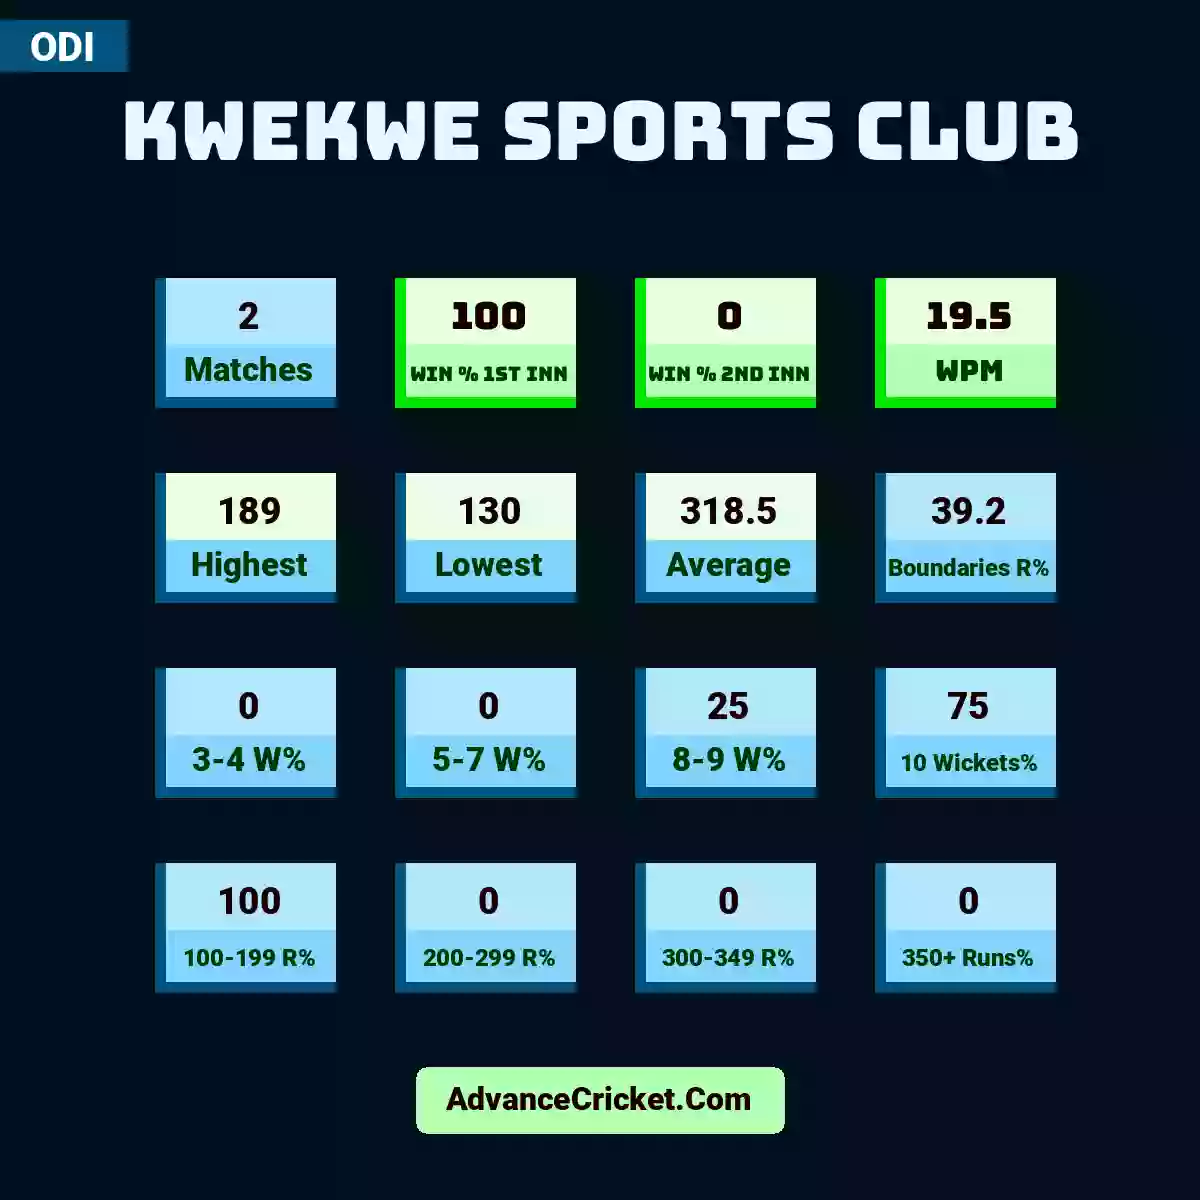 Image showing Kwekwe Sports Club with Matches: 2, Win % 1st Inn: 100, Win % 2nd Inn: 0, WPM: 19.5, Highest: 189, Lowest: 130, Average: 318.5, Boundaries R%: 39.2, 3-4 W%: 0, 5-7 W%: 0, 8-9 W%: 25, 10 Wickets%: 75, 100-199 R%: 100, 200-299 R%: 0, 300-349 R%: 0, 350+ Runs%: 0.